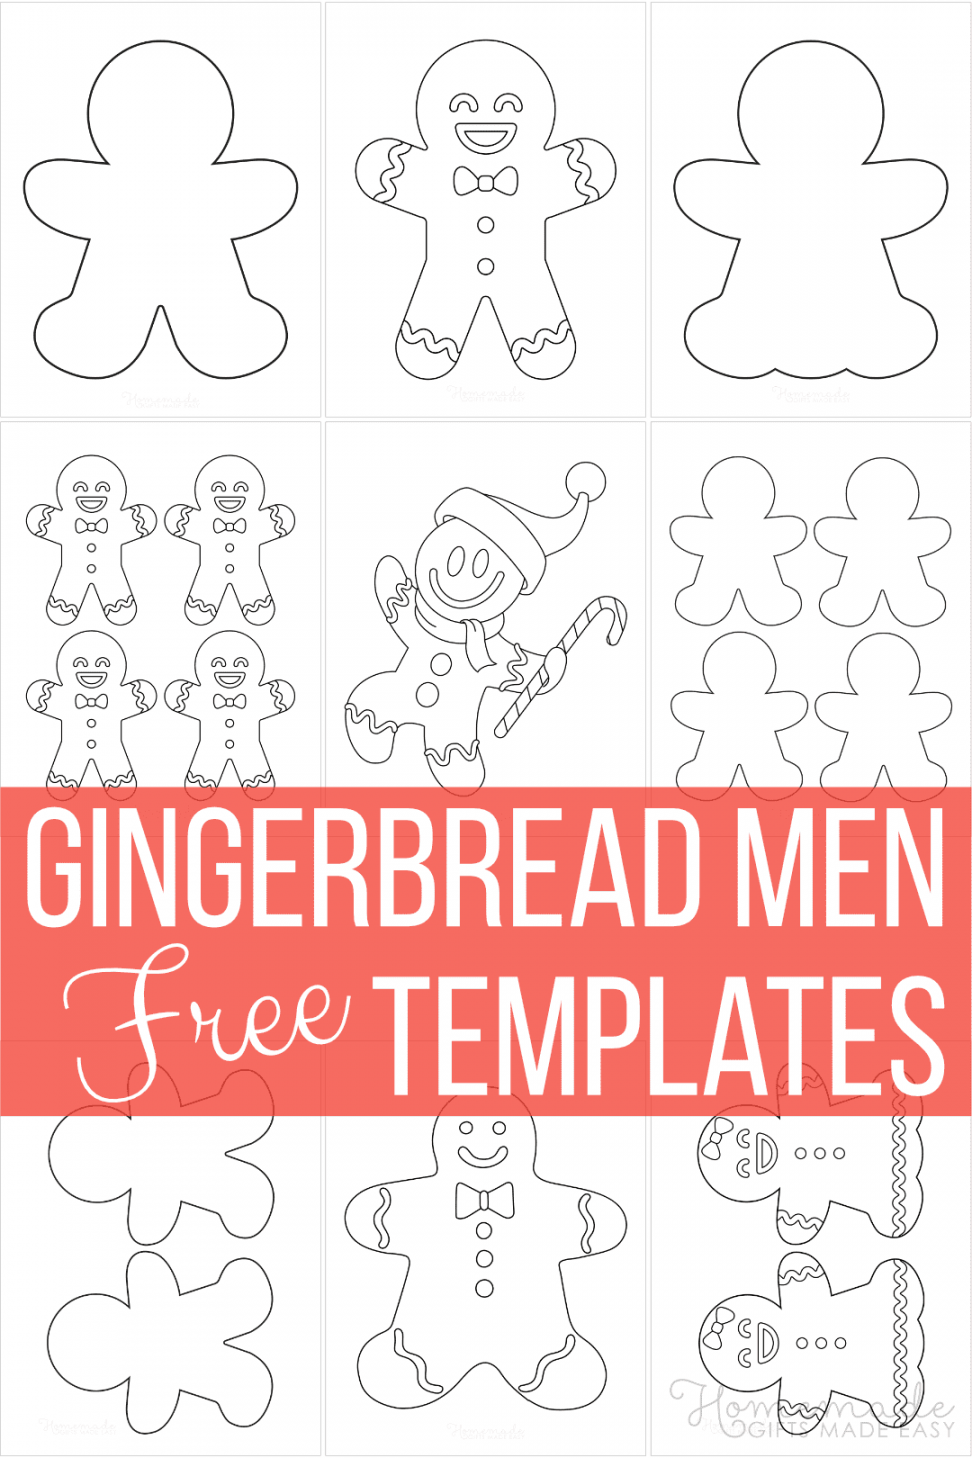 Free Printable Gingerbread Man Templates & Coloring Pages - FREE Printables - Gingerbread Man Outline Printable